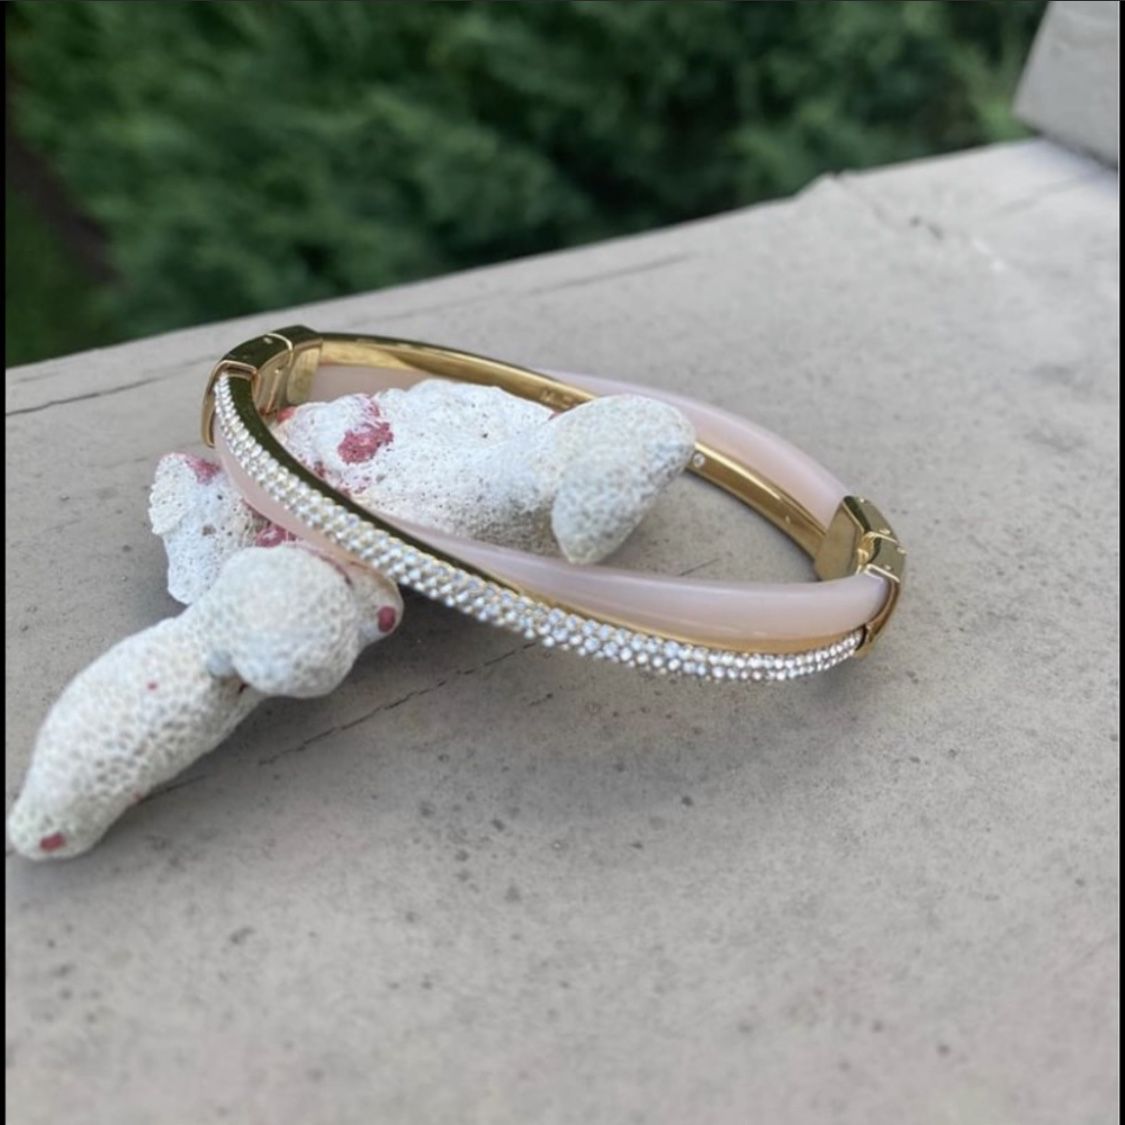 Michael Kors Soft Pink Bracelet